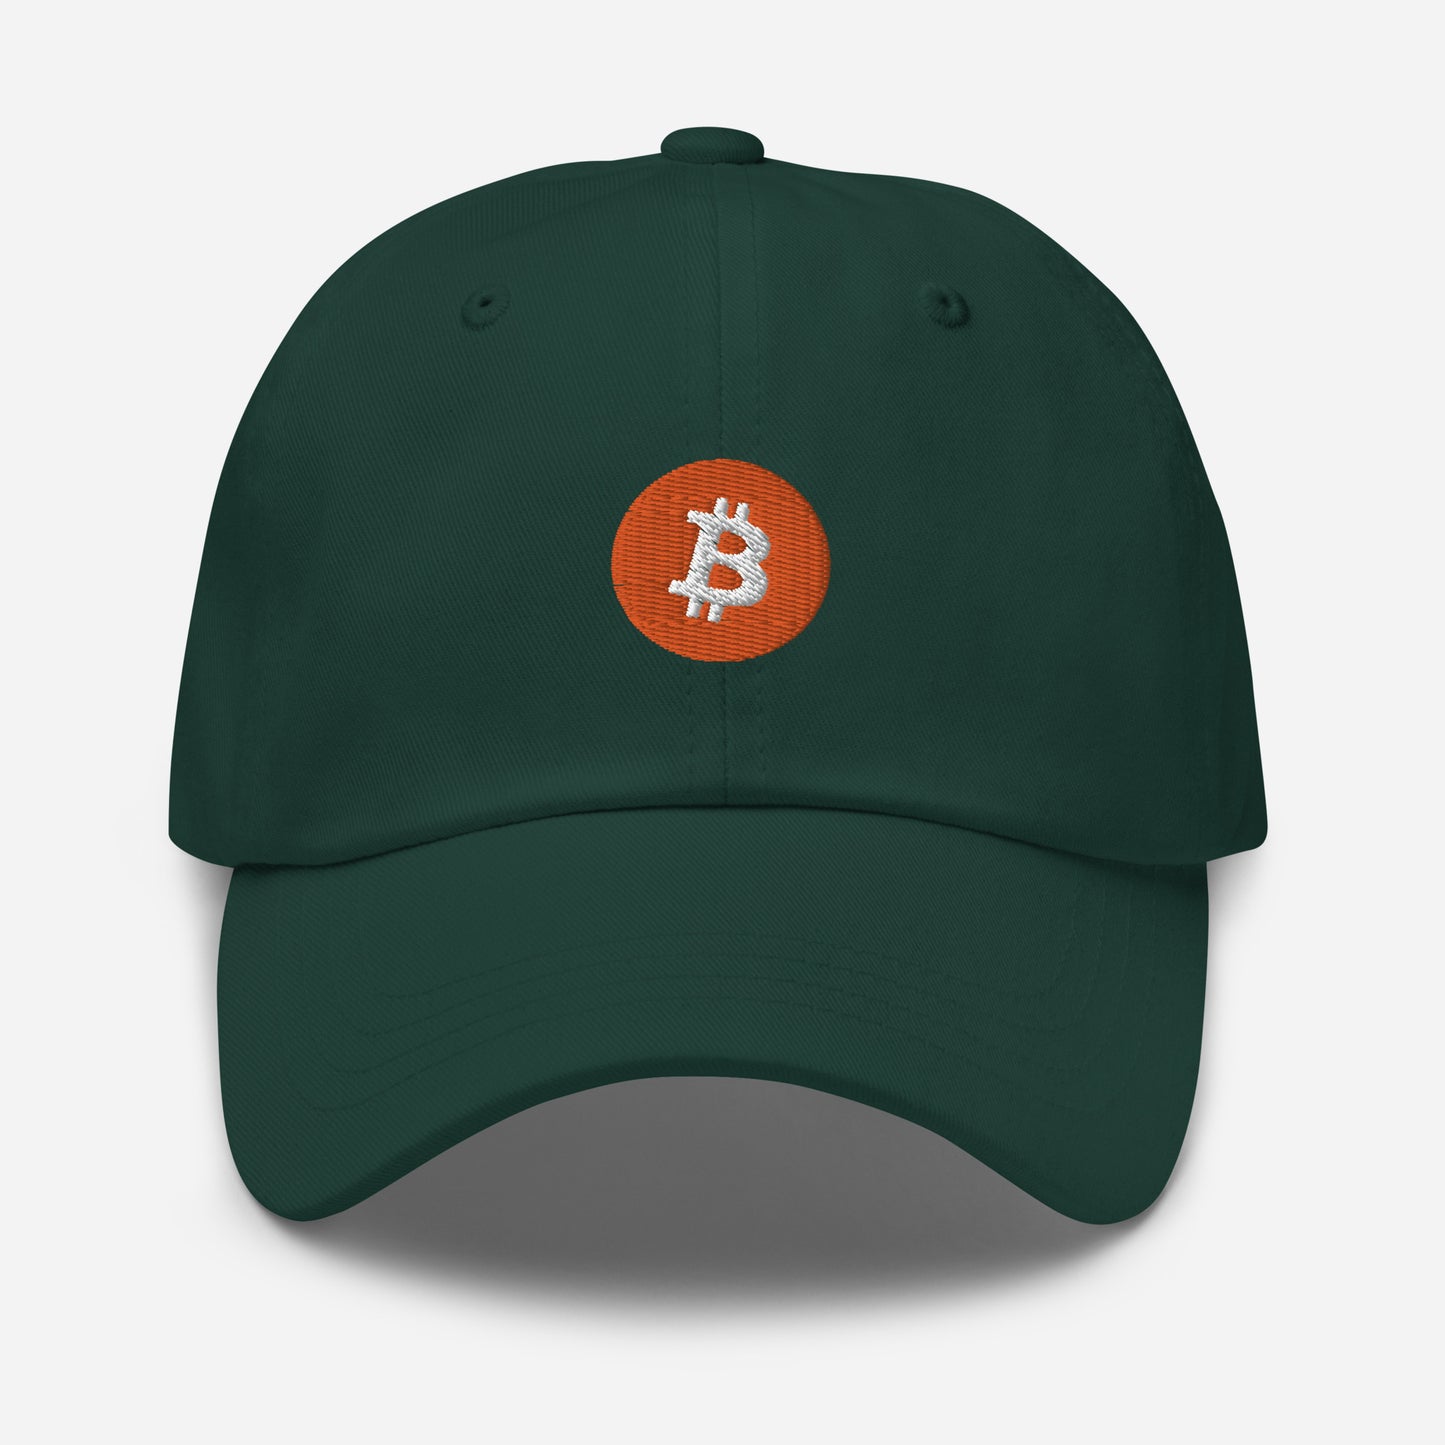 Bitcoin (BTC) - Fitted baseball cap